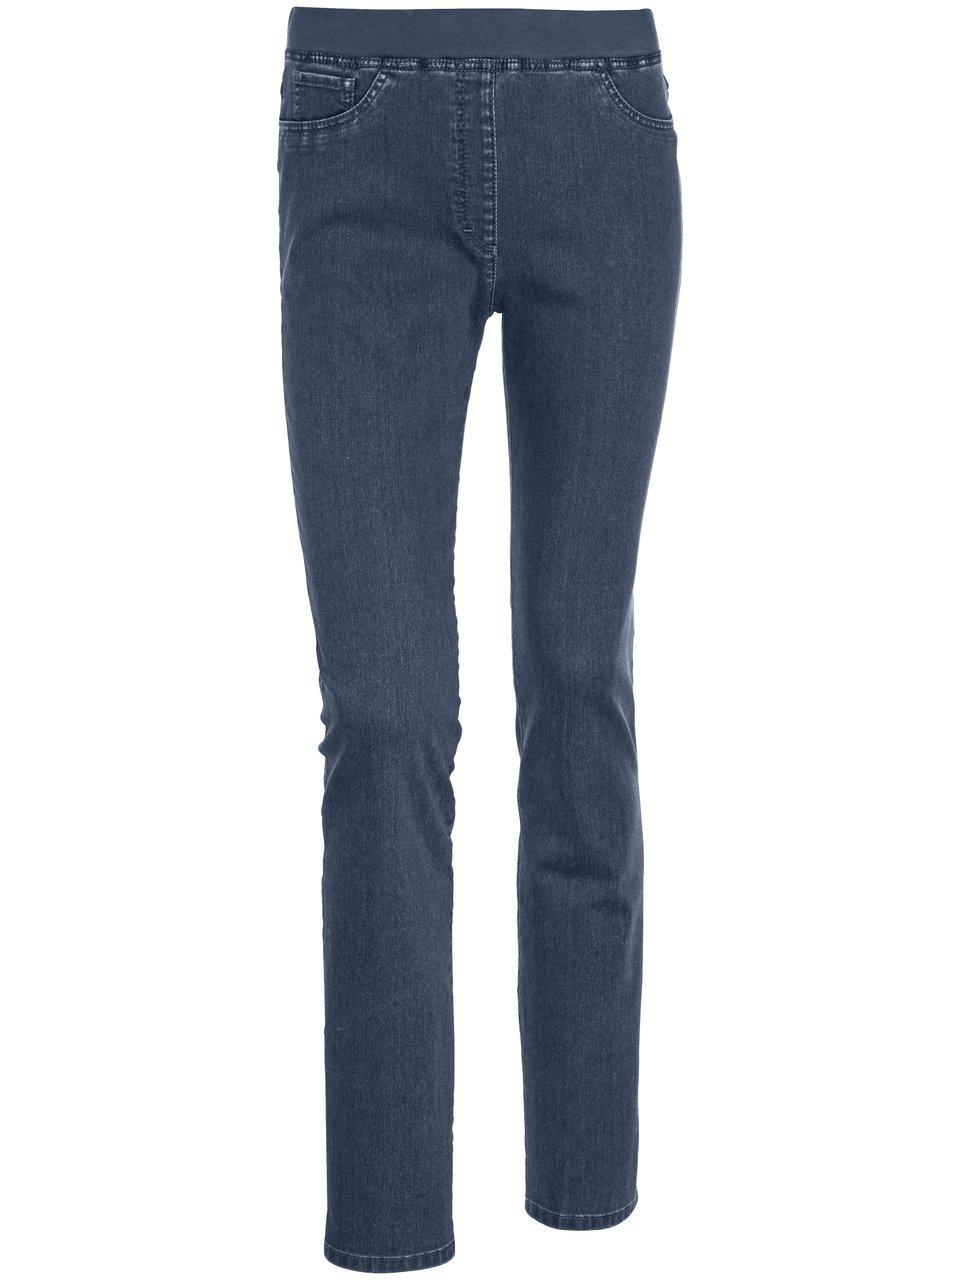 Comfort Plus-jeans model Carina Van Raphaela by Brax denim